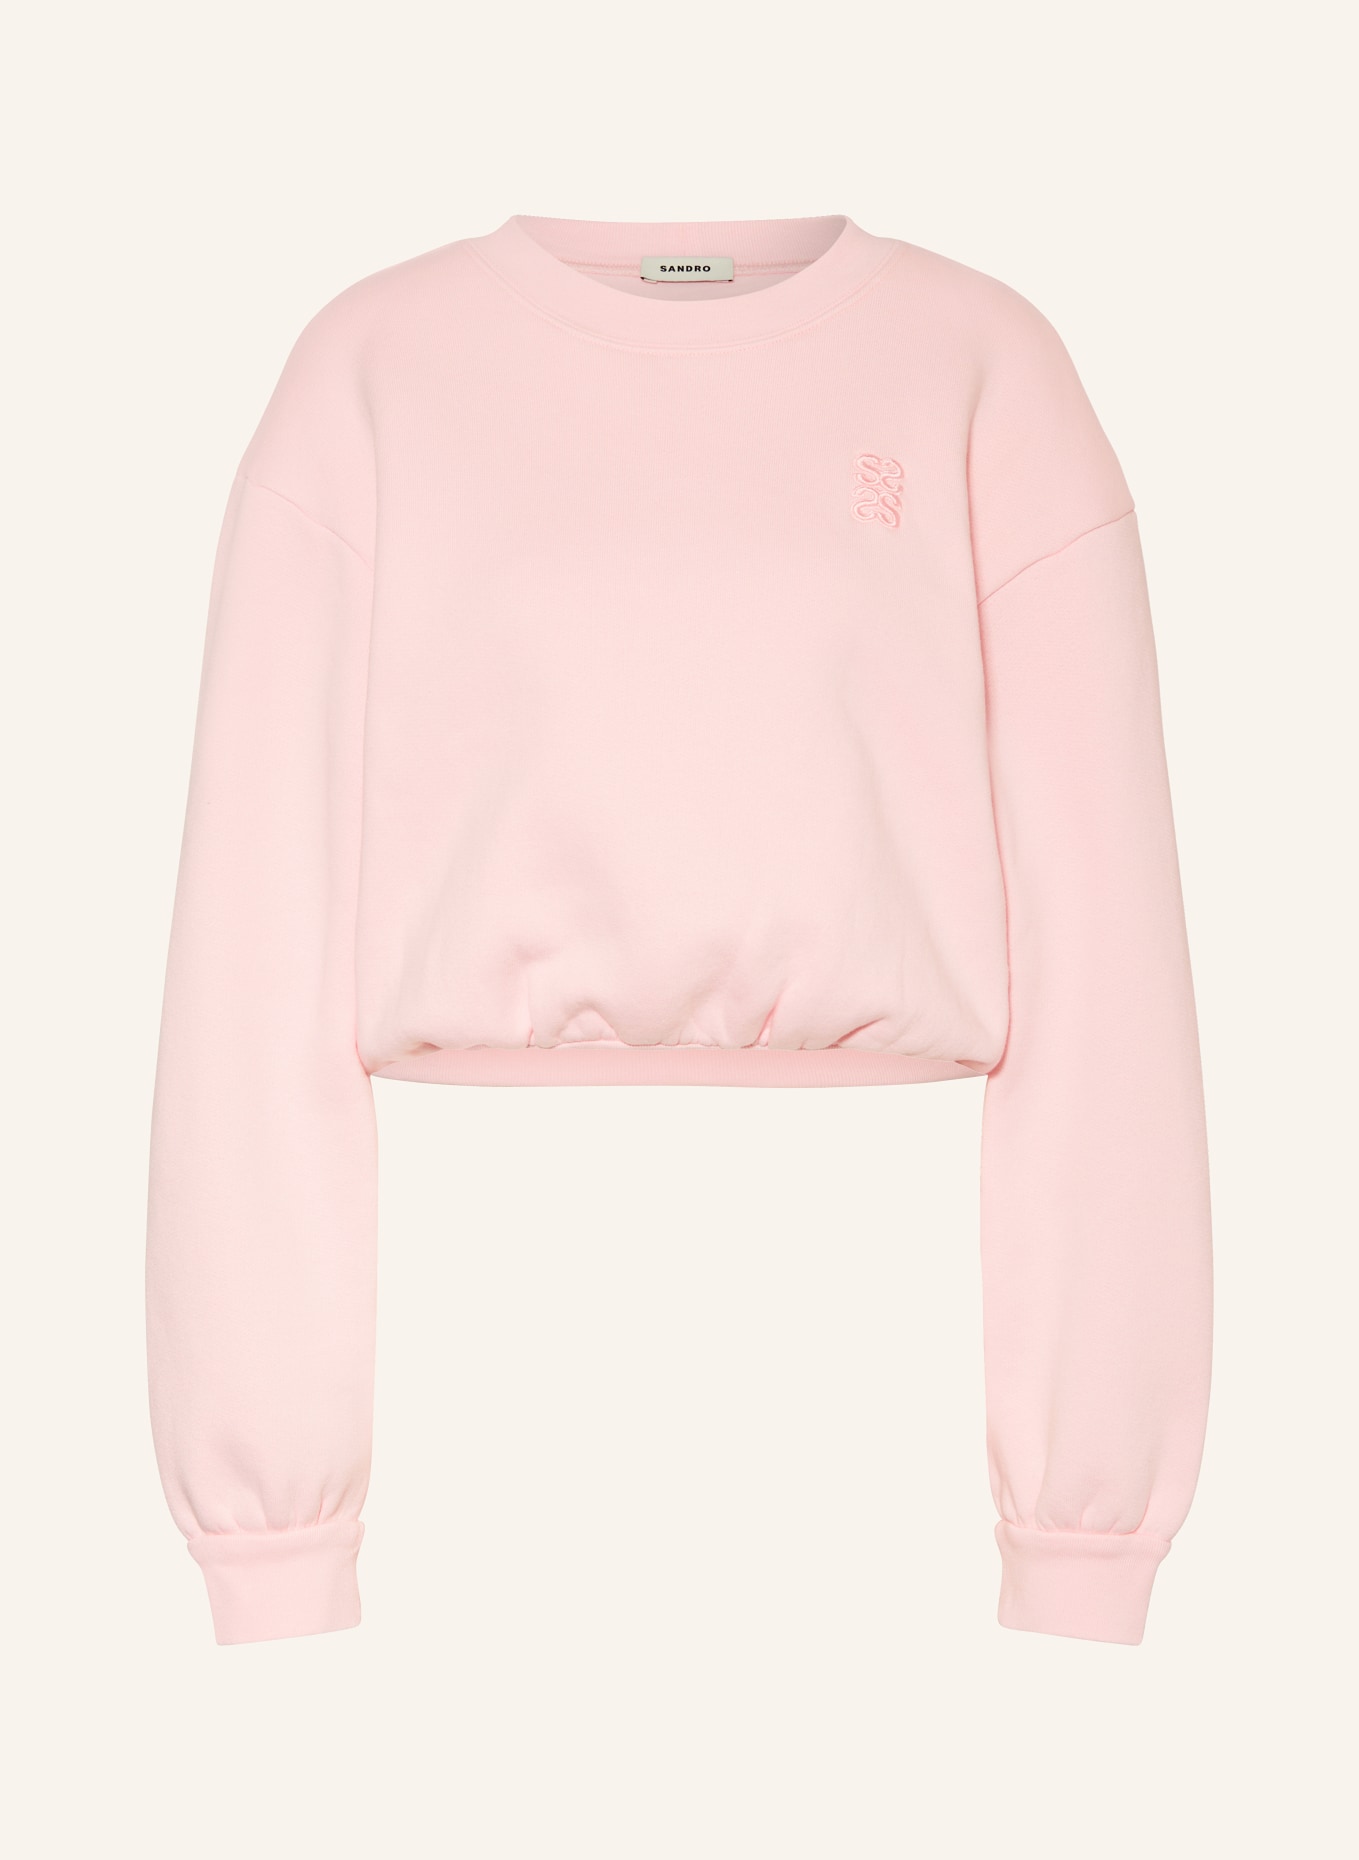 SANDRO Sweatshirt, Farbe: PINK (Bild 1)